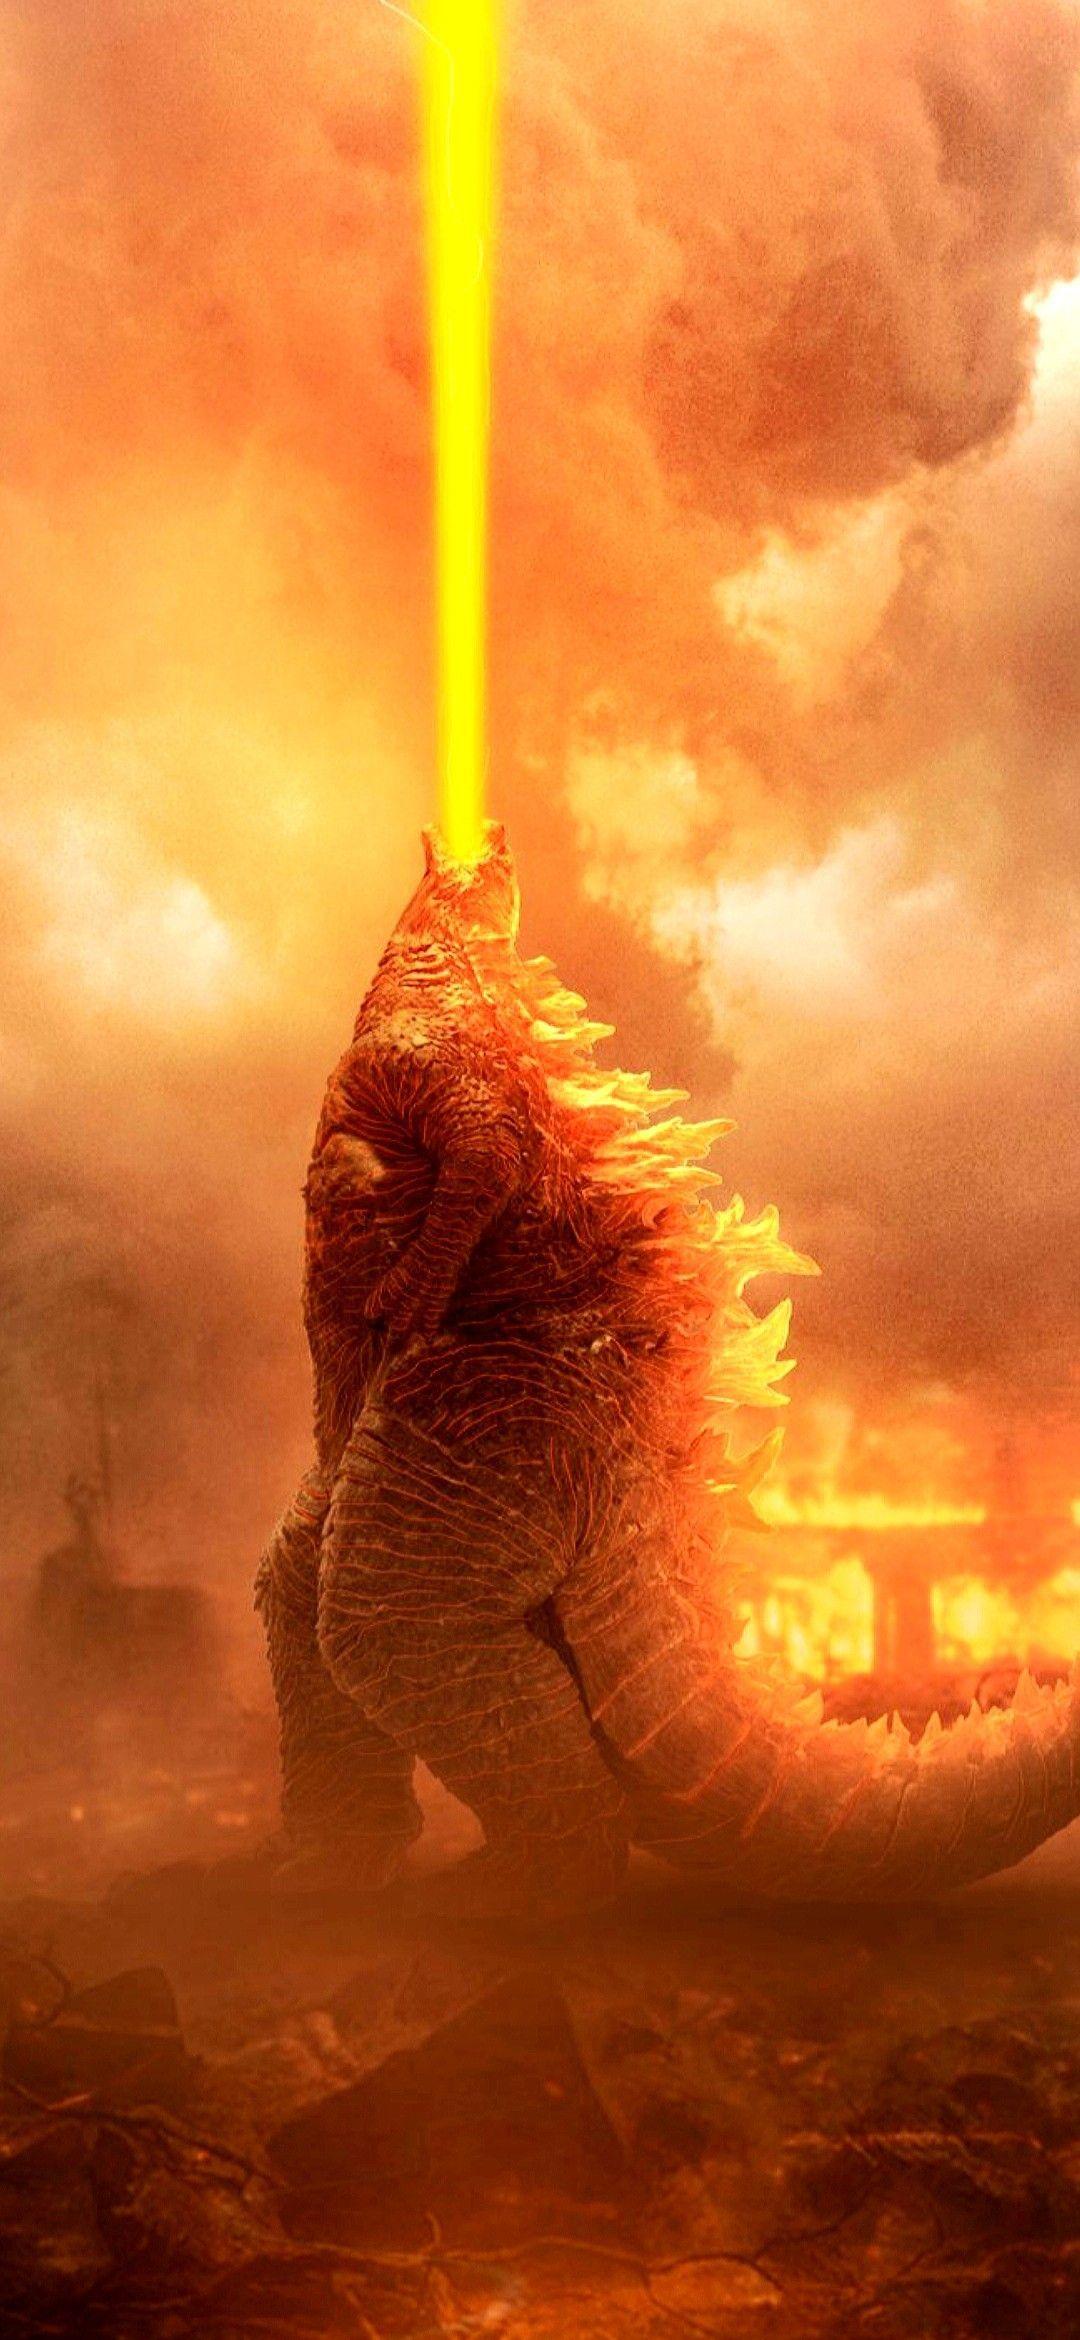 Godzilla Final Wars Burning Godzilla wallpaper by TheSpiderAdventurer on  DeviantArt